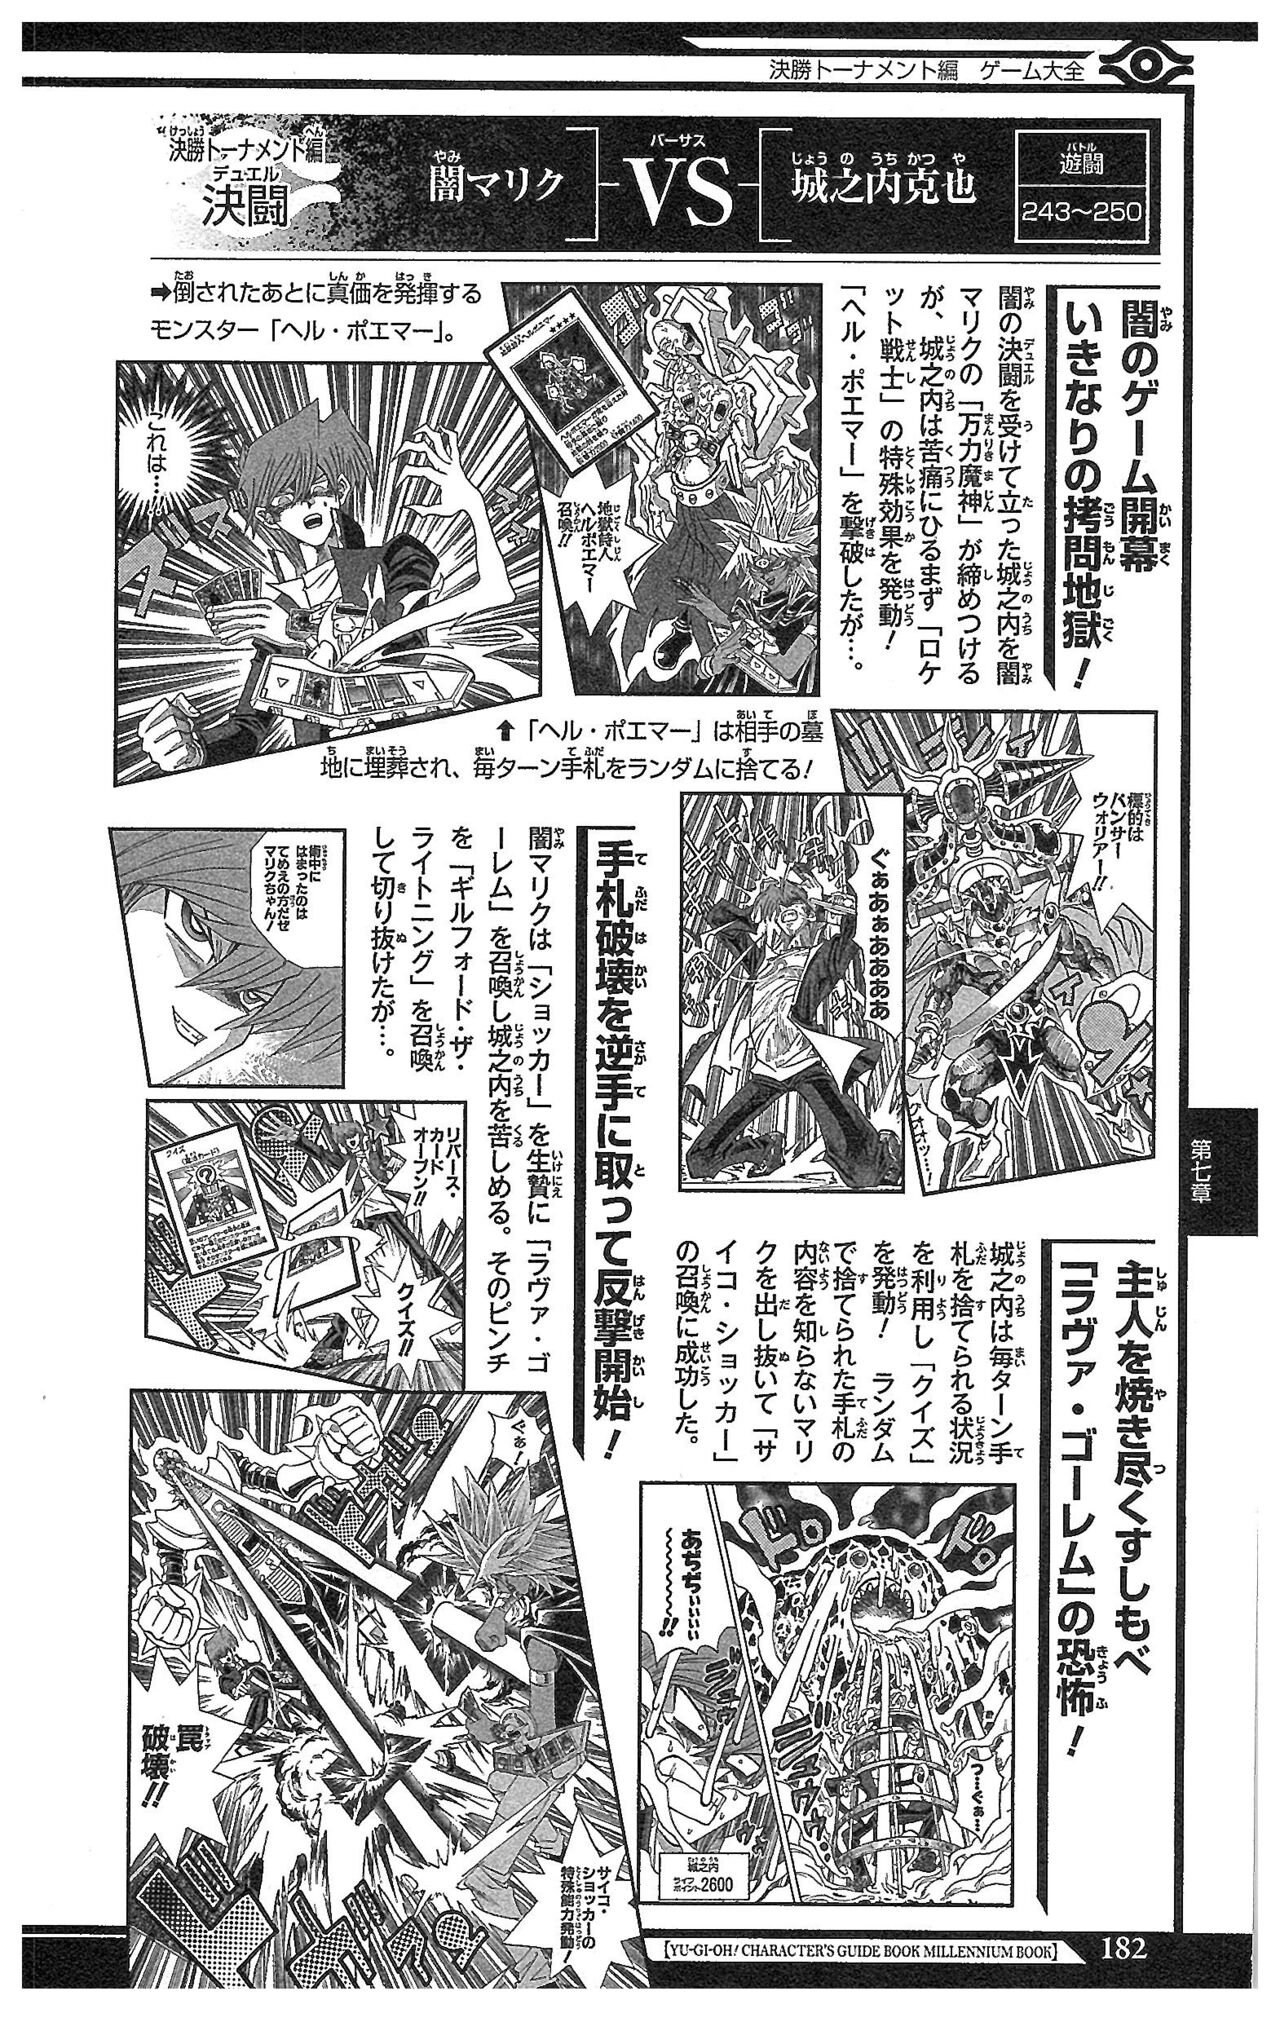 Yu-Gi-Oh! Character Guidebook: Millennium Book 178